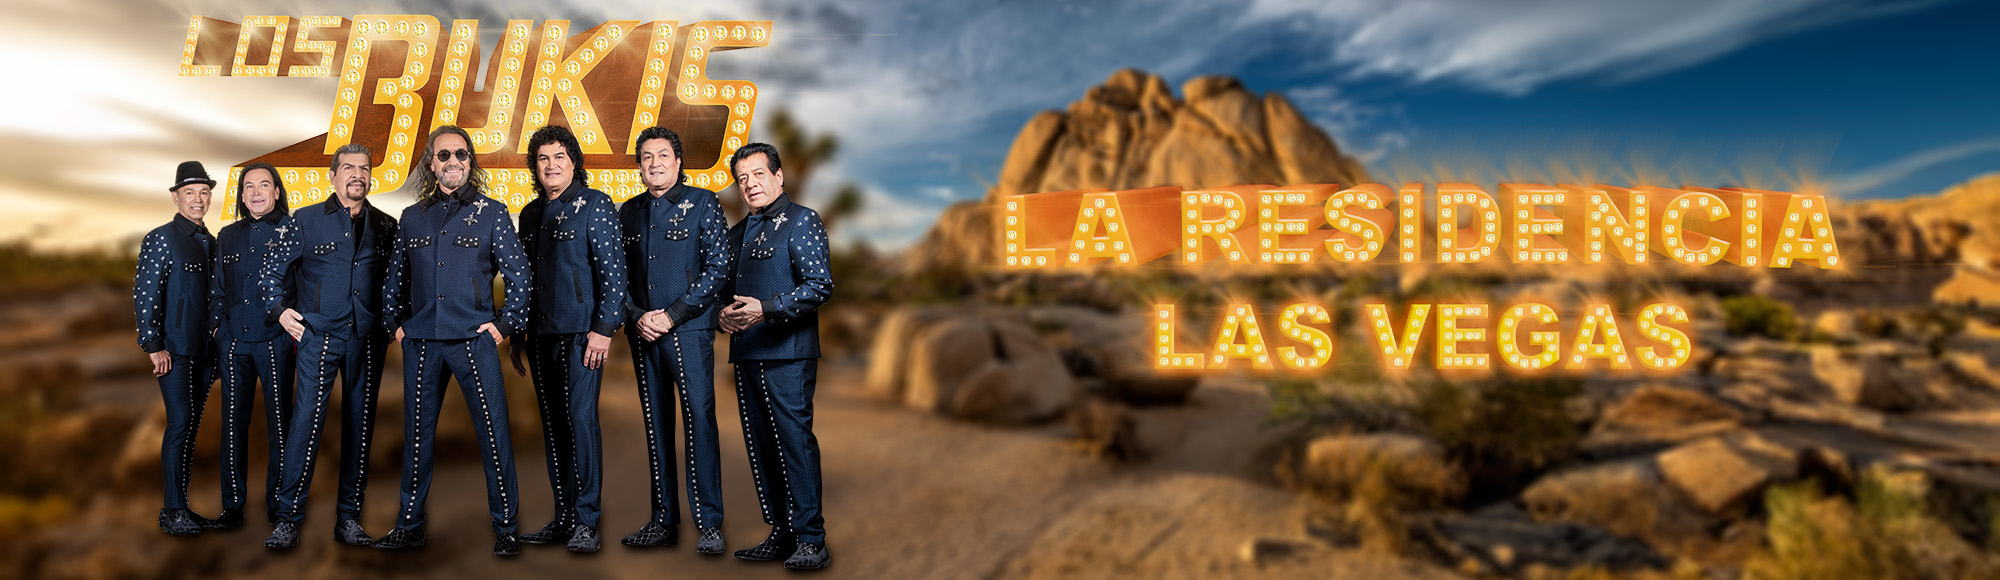 Los Bukis Will Host Las Vegas Residency: See the Dates